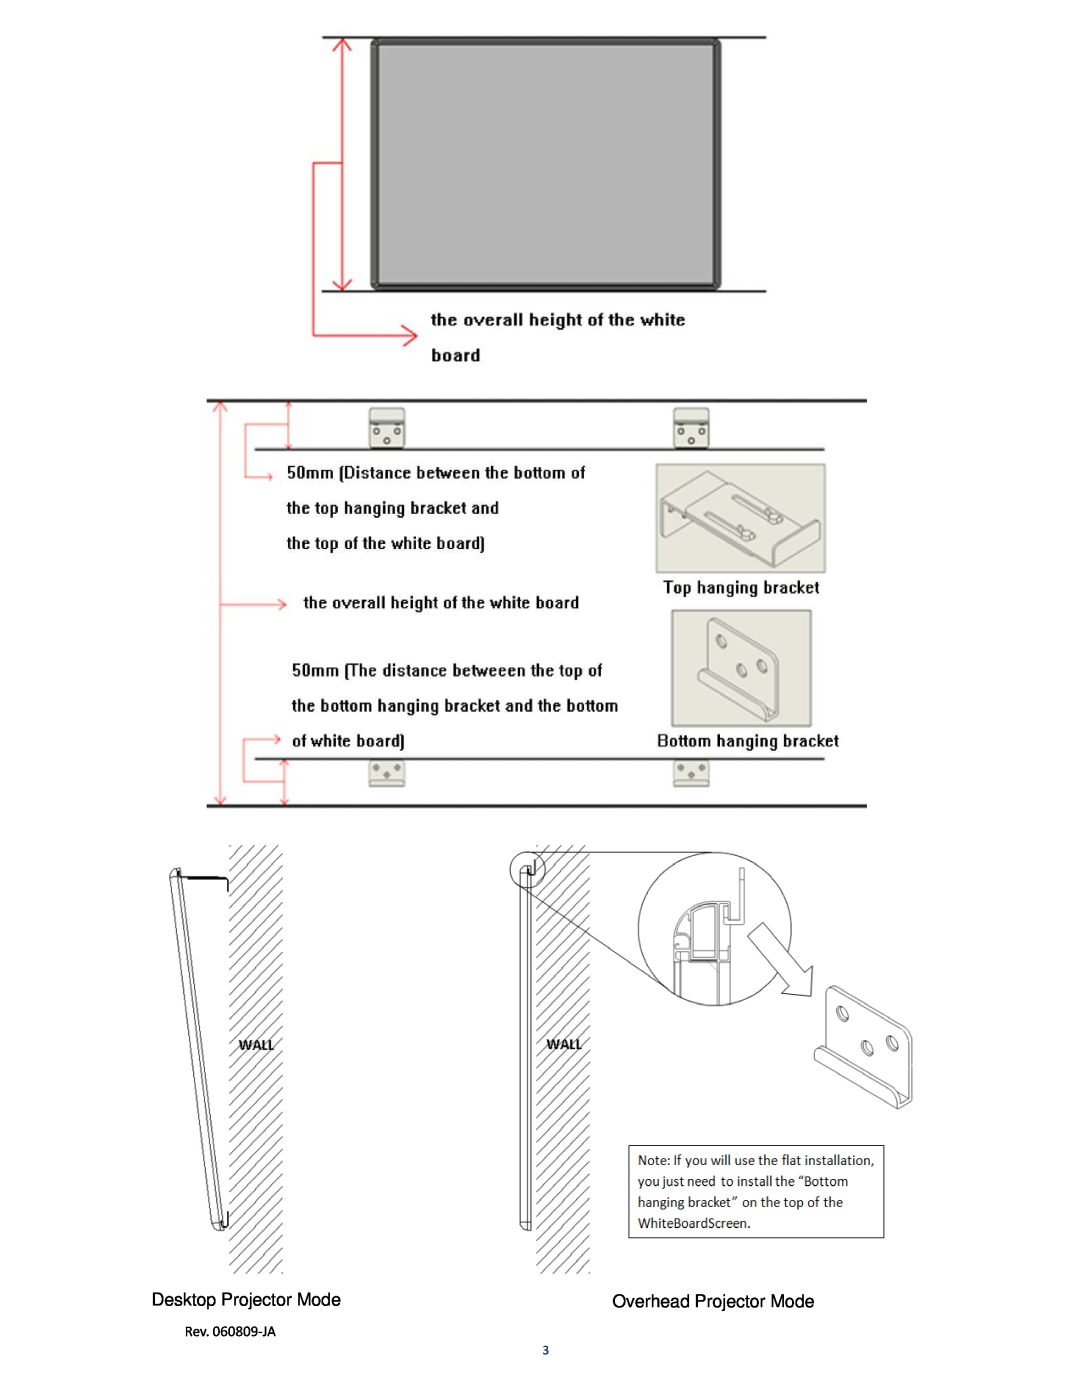 Elite Screens WhiteBoardScreen manual Desktop Projector Mode, Overhead Projector Mode, Rev. 060809‐JA 